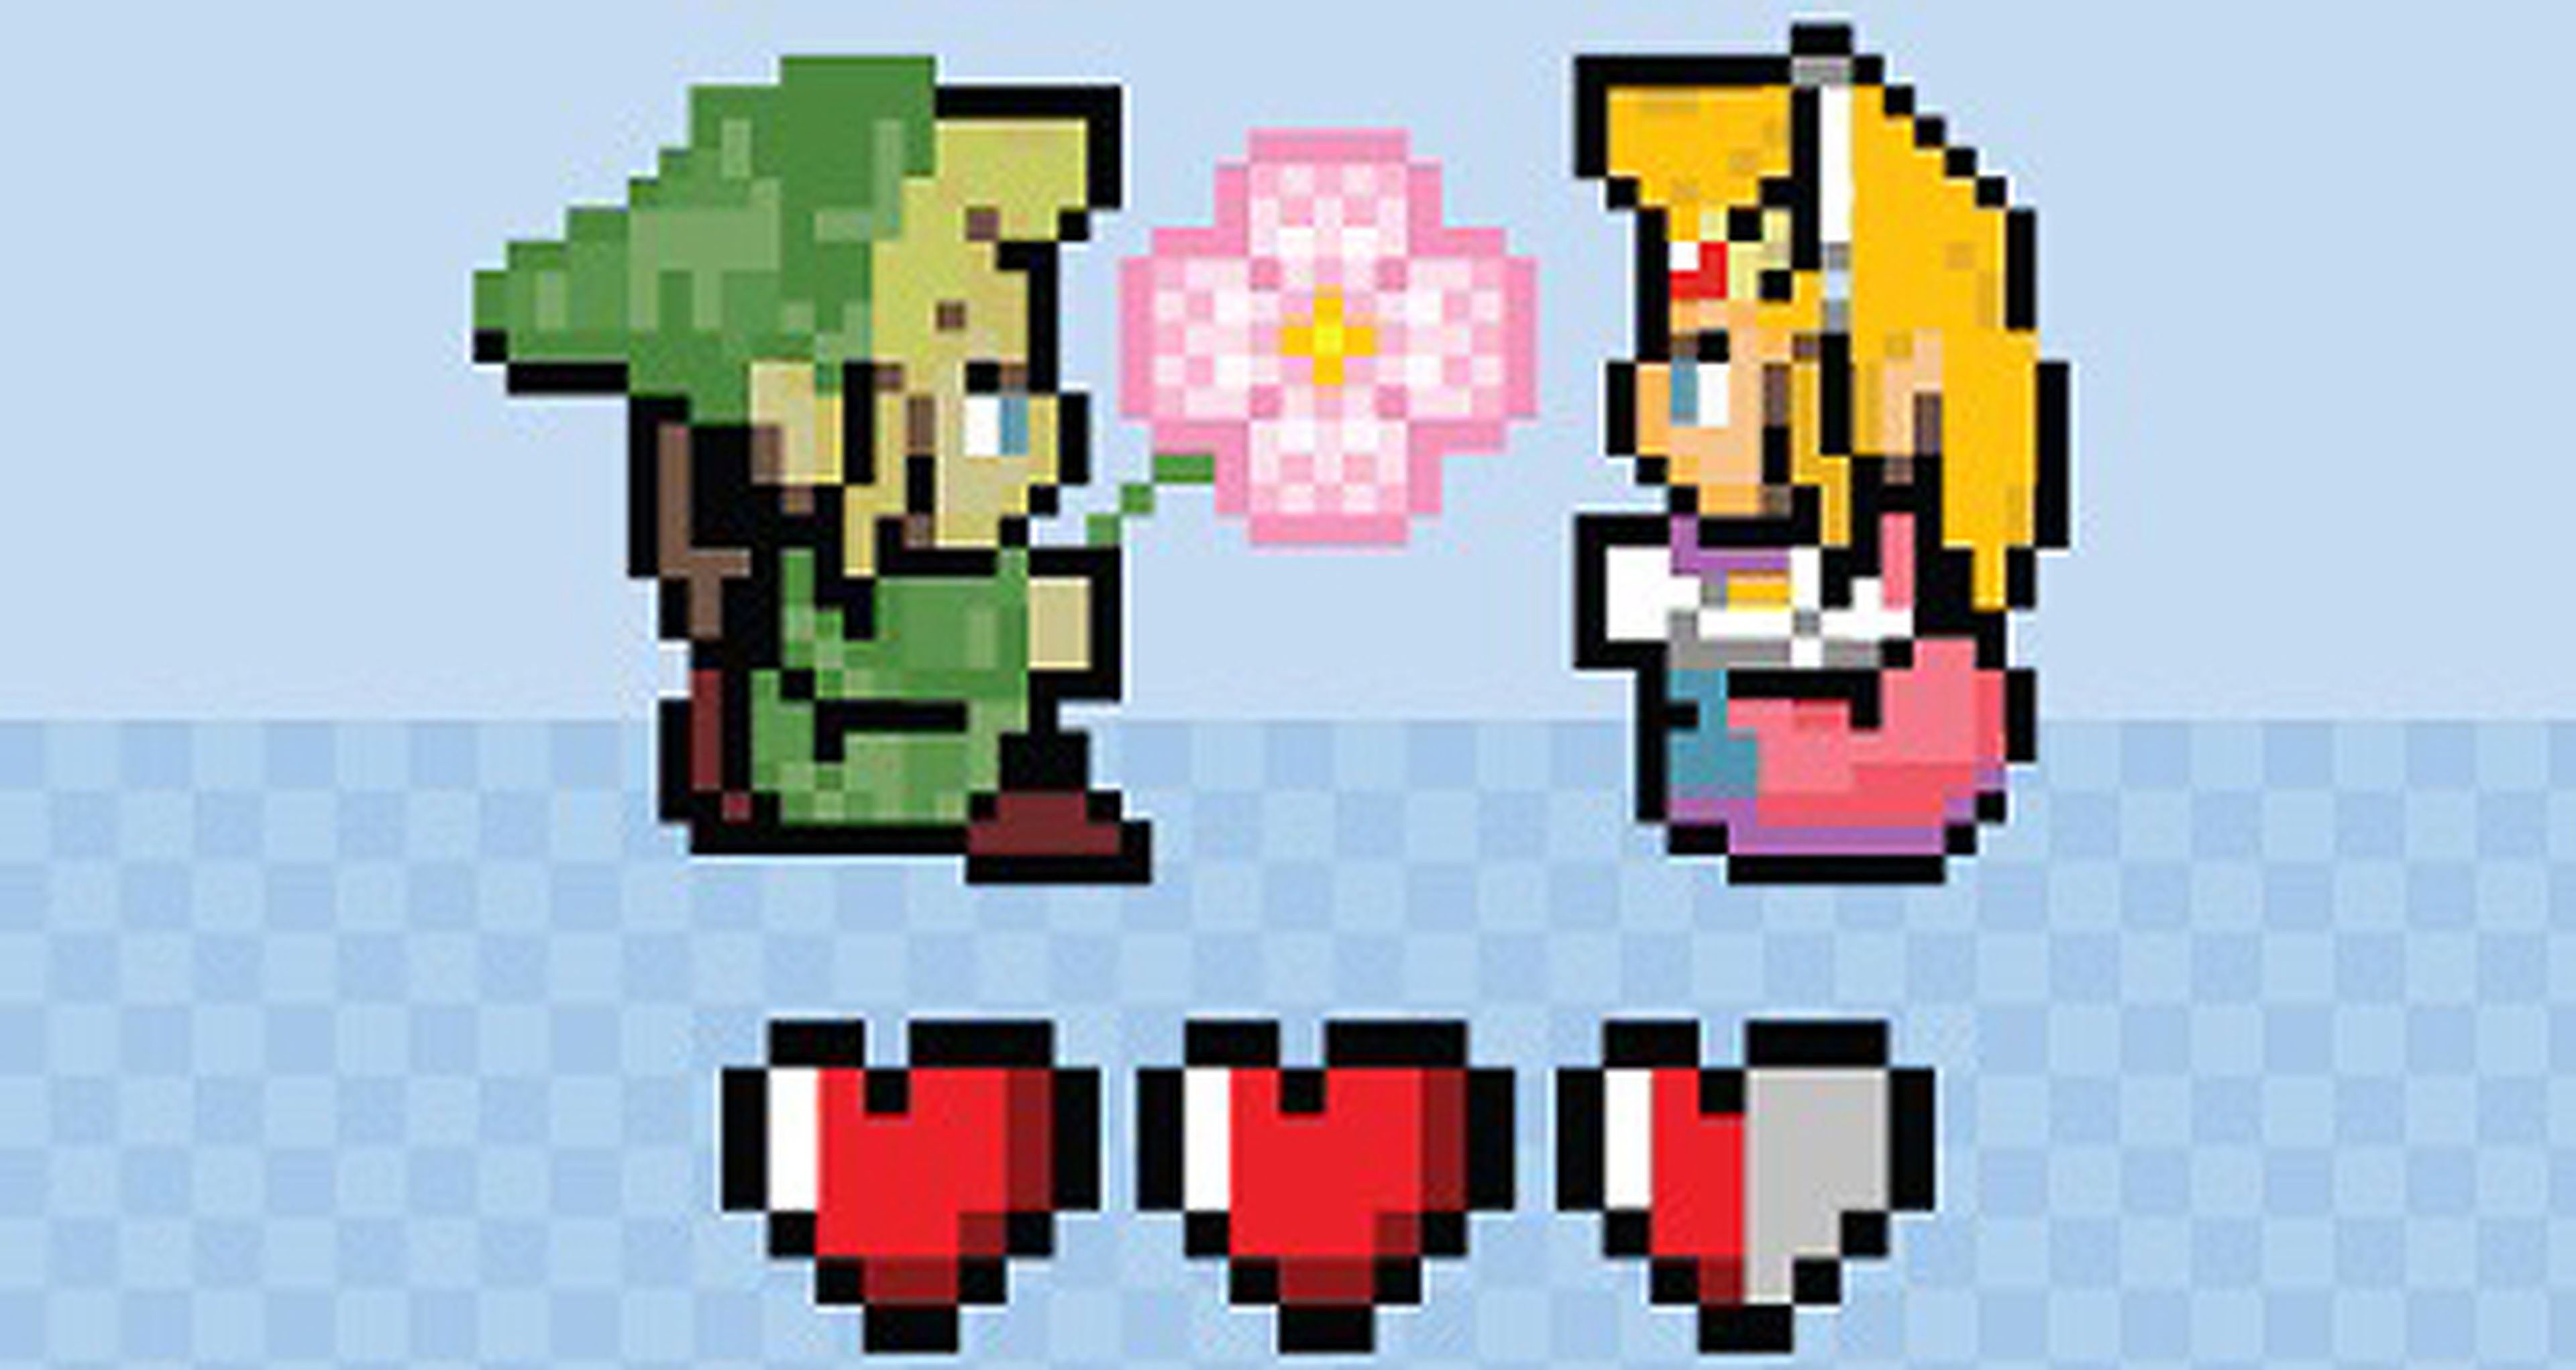 Especial San Valentín: momentos románticos en videojuegos